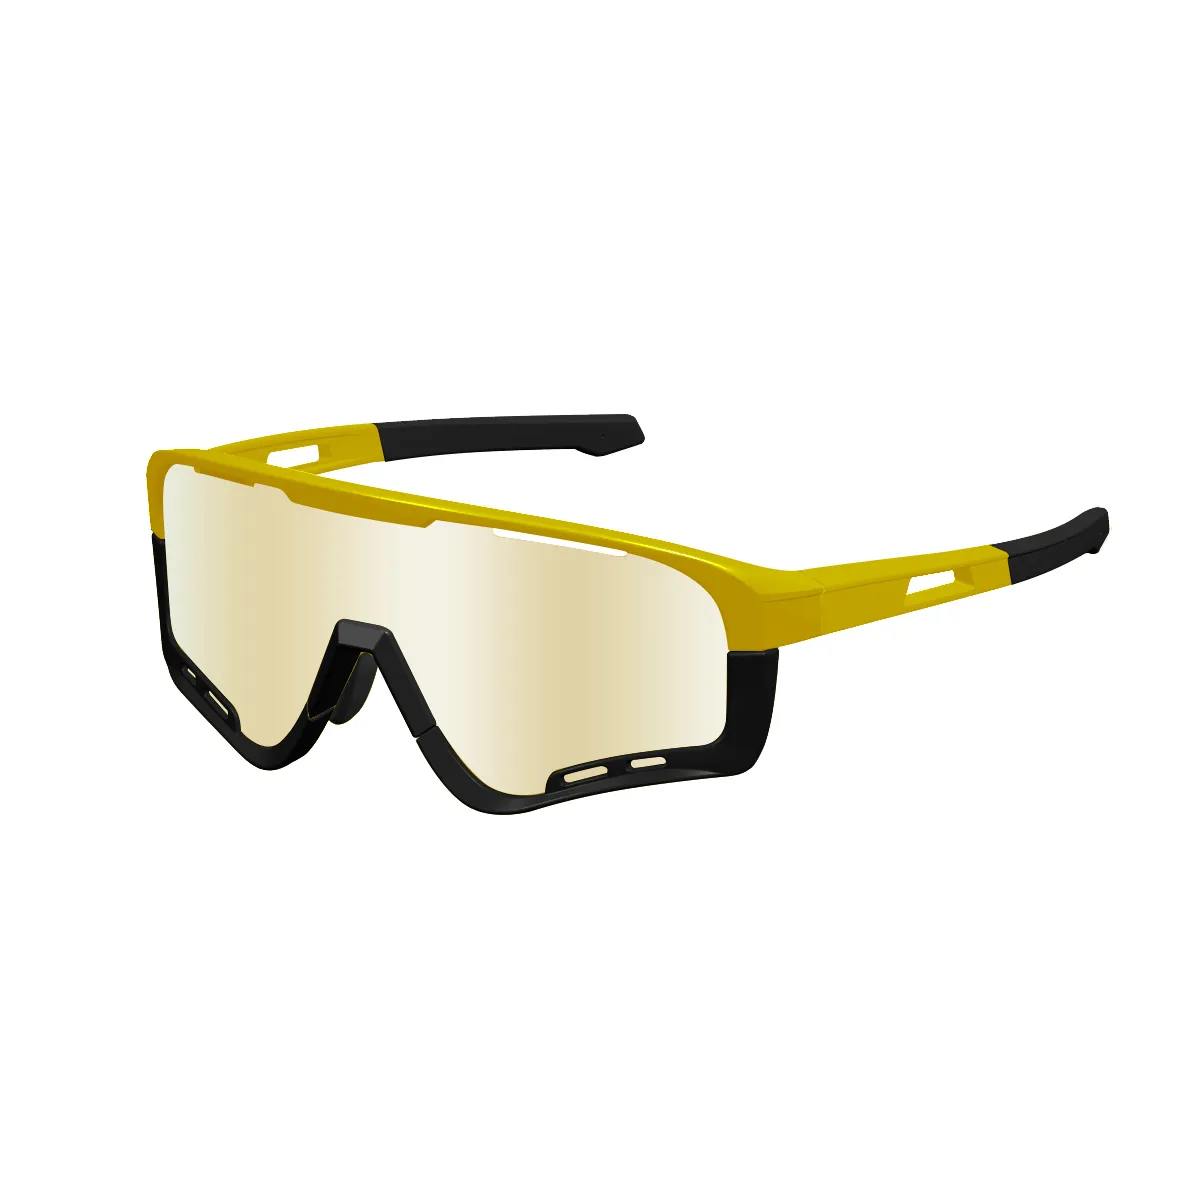 Cycling Sunglasses Men's Women UV400 Sports Glasses Riding Fishing Driving Eyewear MTB Road Bike Goggles